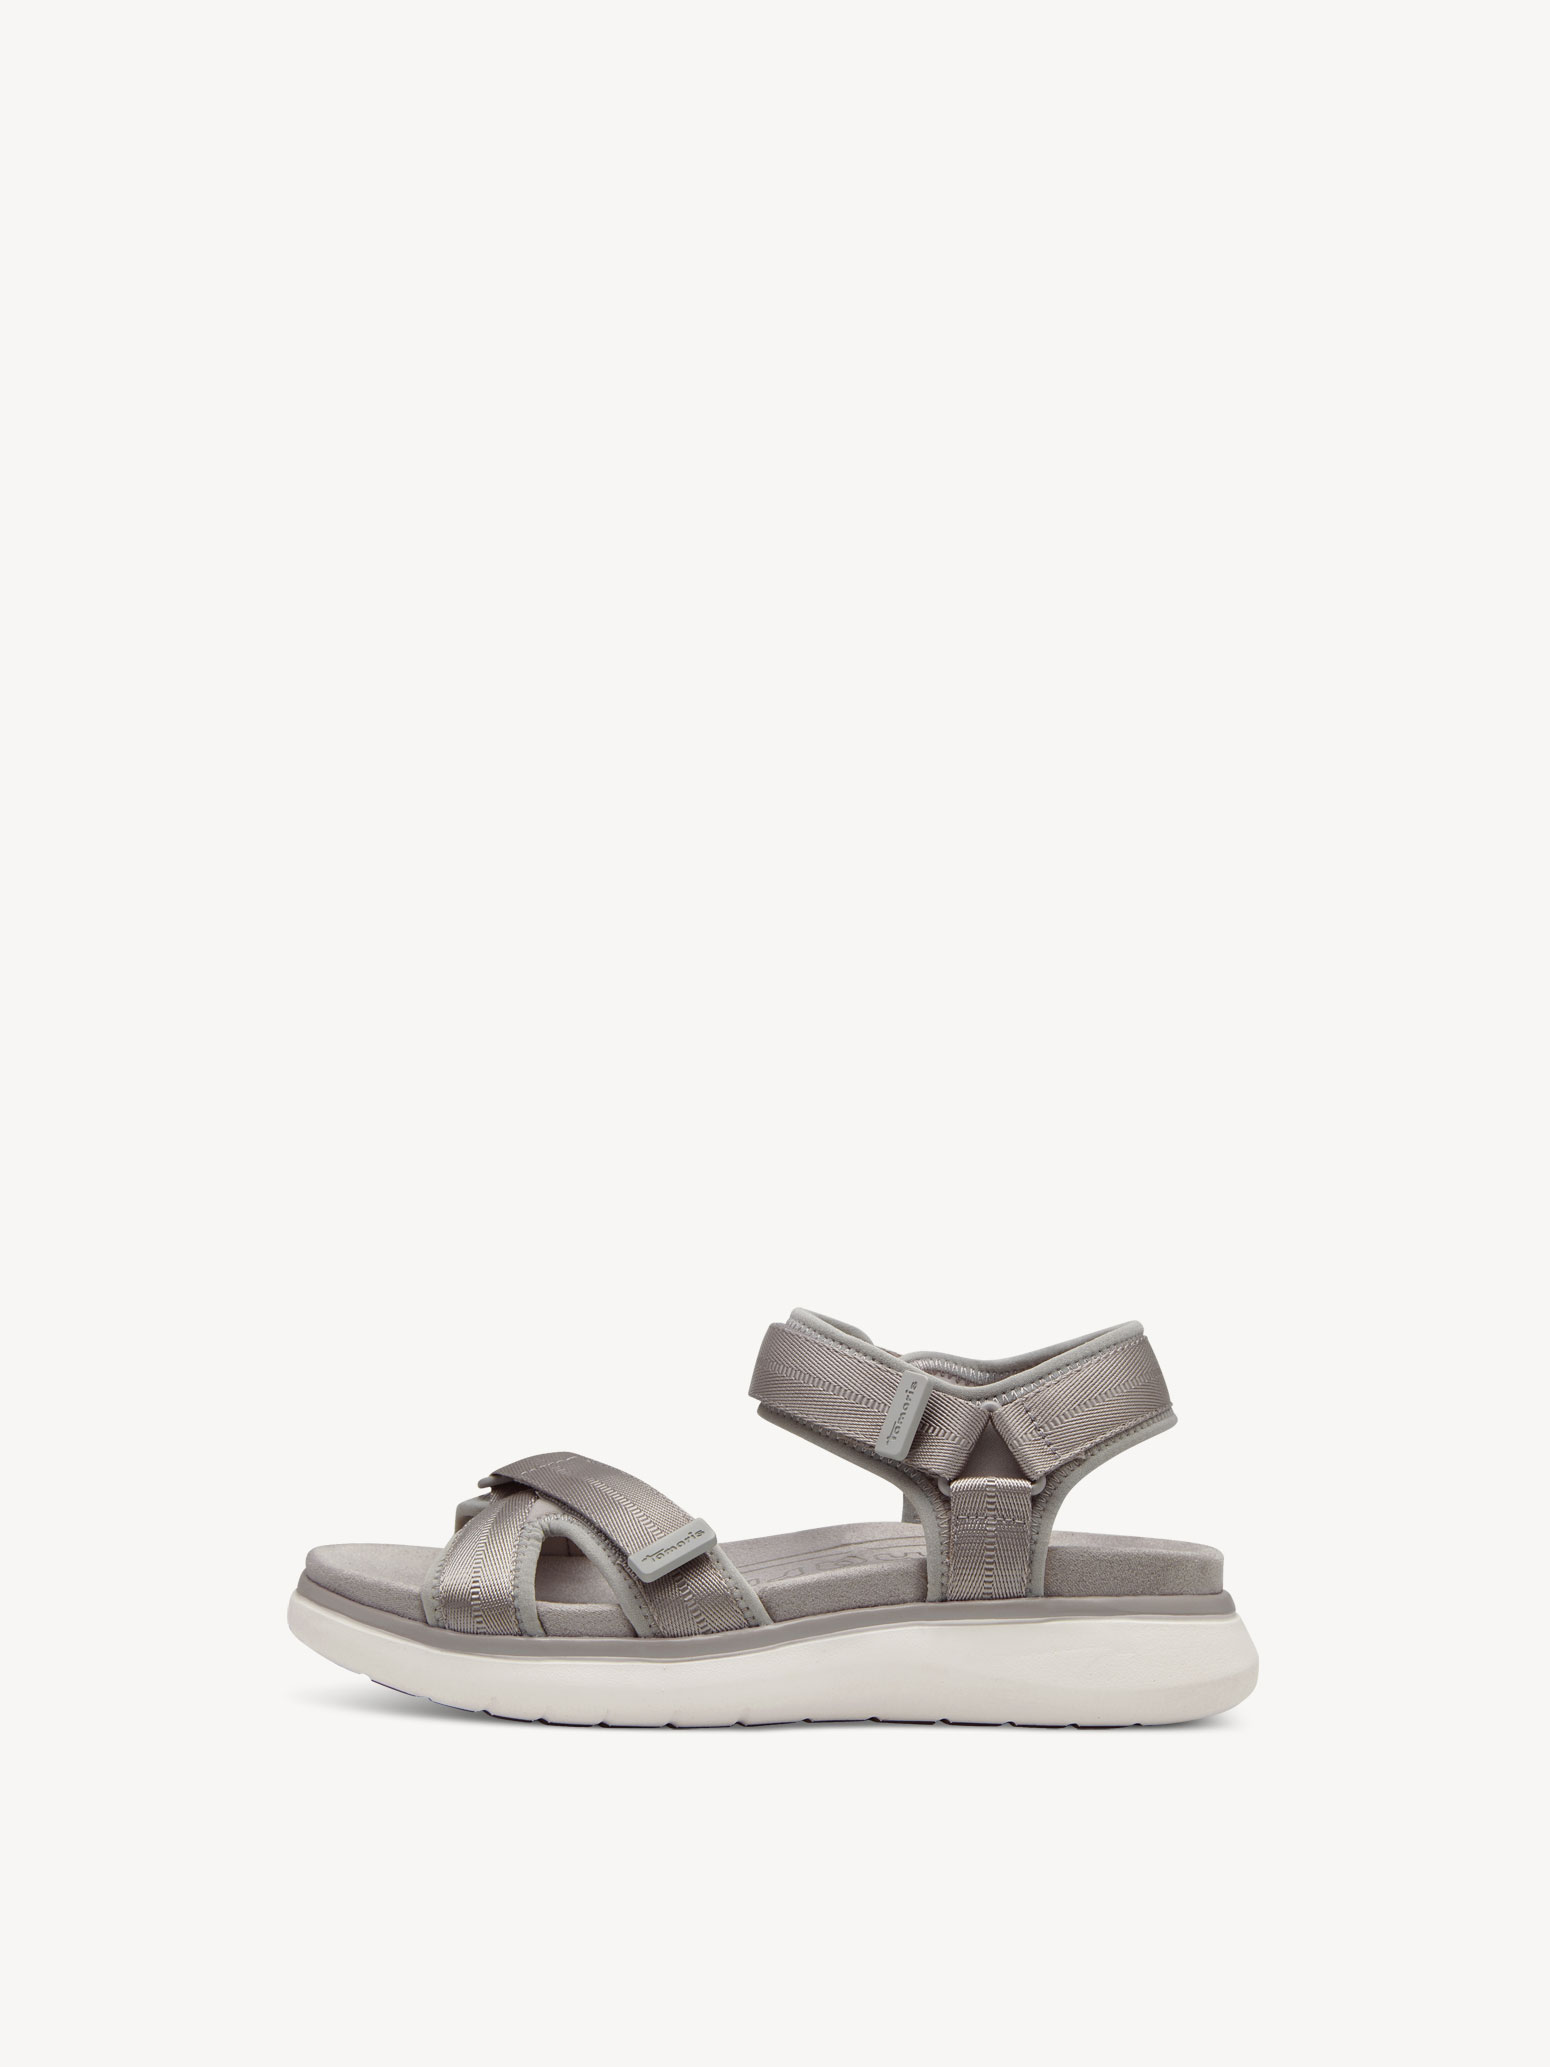 Sandal - grey